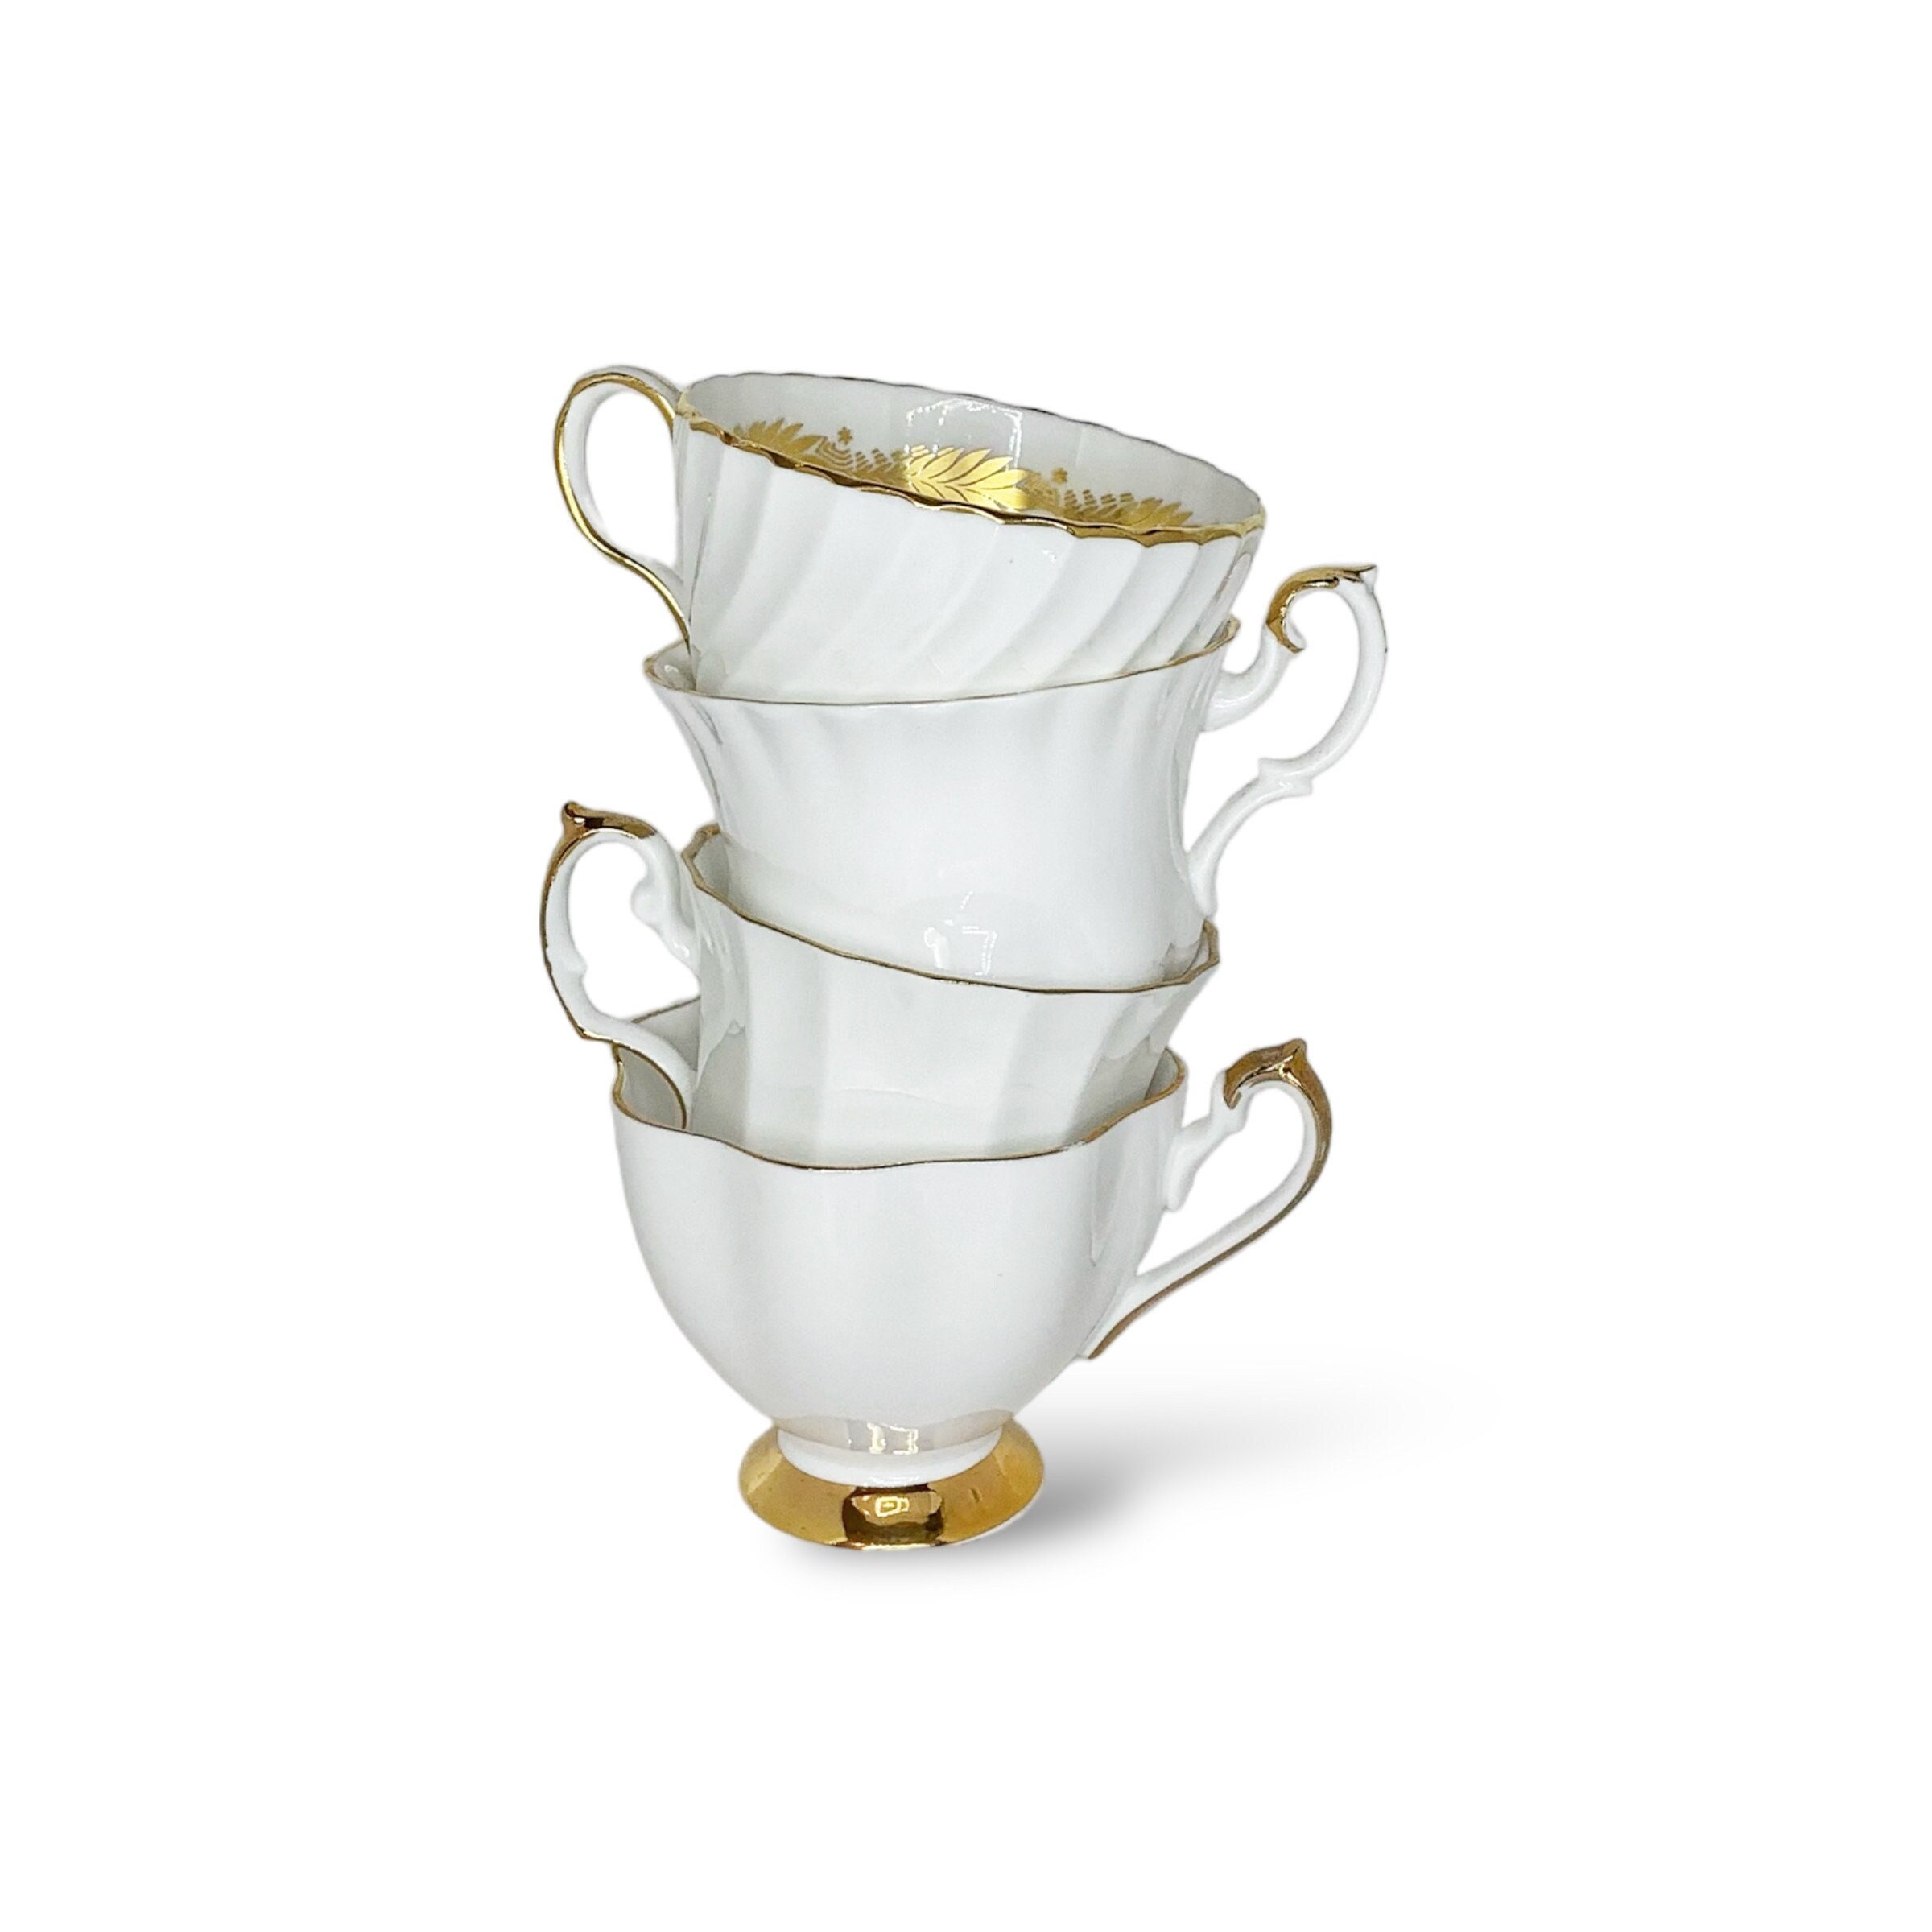 Bulk Lot of Tea Cups, Vintage Assortments of 6, 12 or 24 Fine